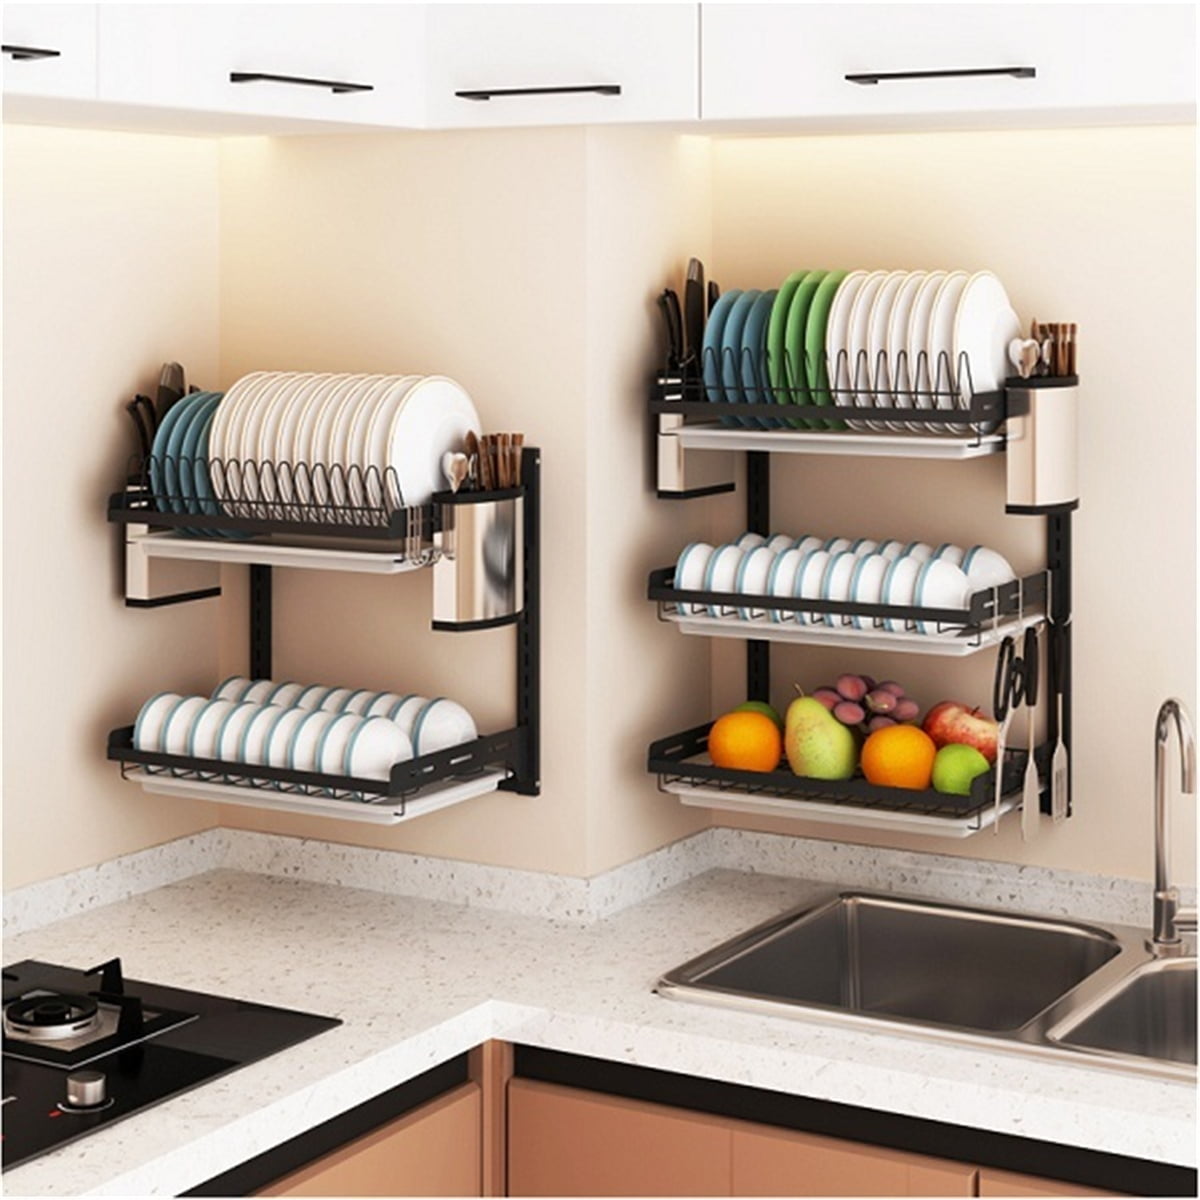 25/25 Tier Dish Rack DIY Kitchen Storage Shelf Utensils Holder Wall Mount  Shelves Spice